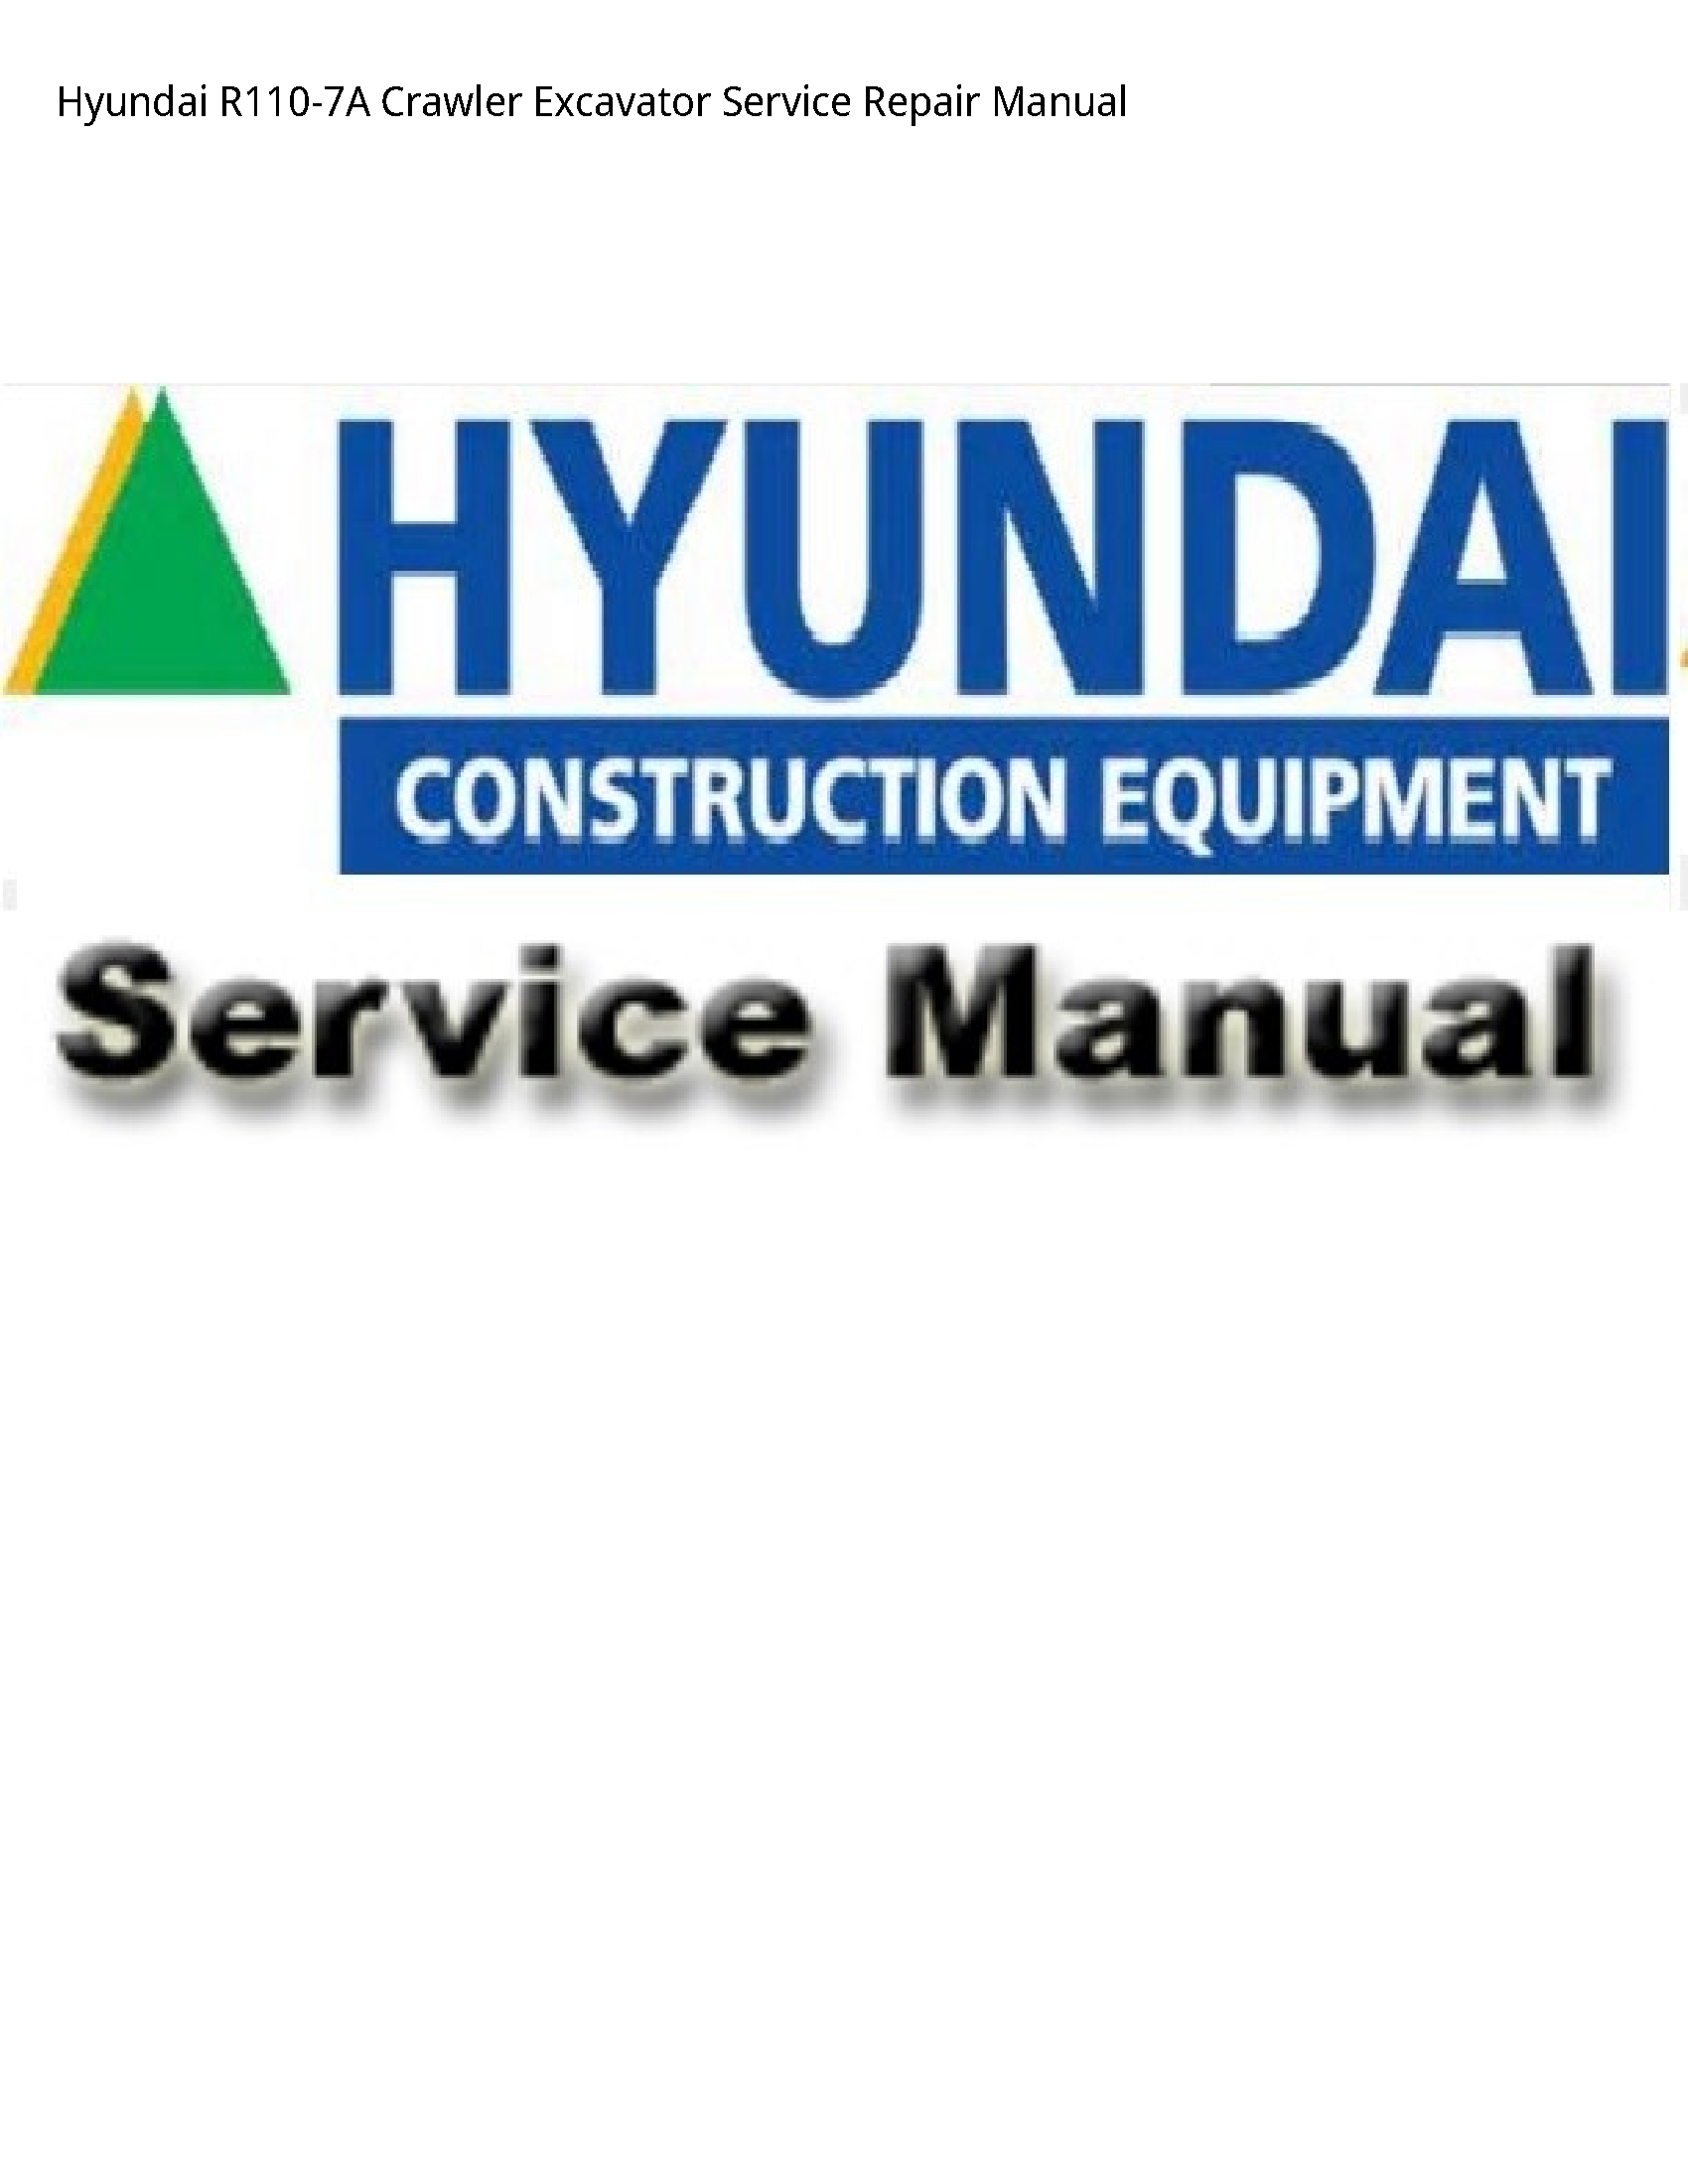 Hyundai R110-7A Crawler Excavator manual